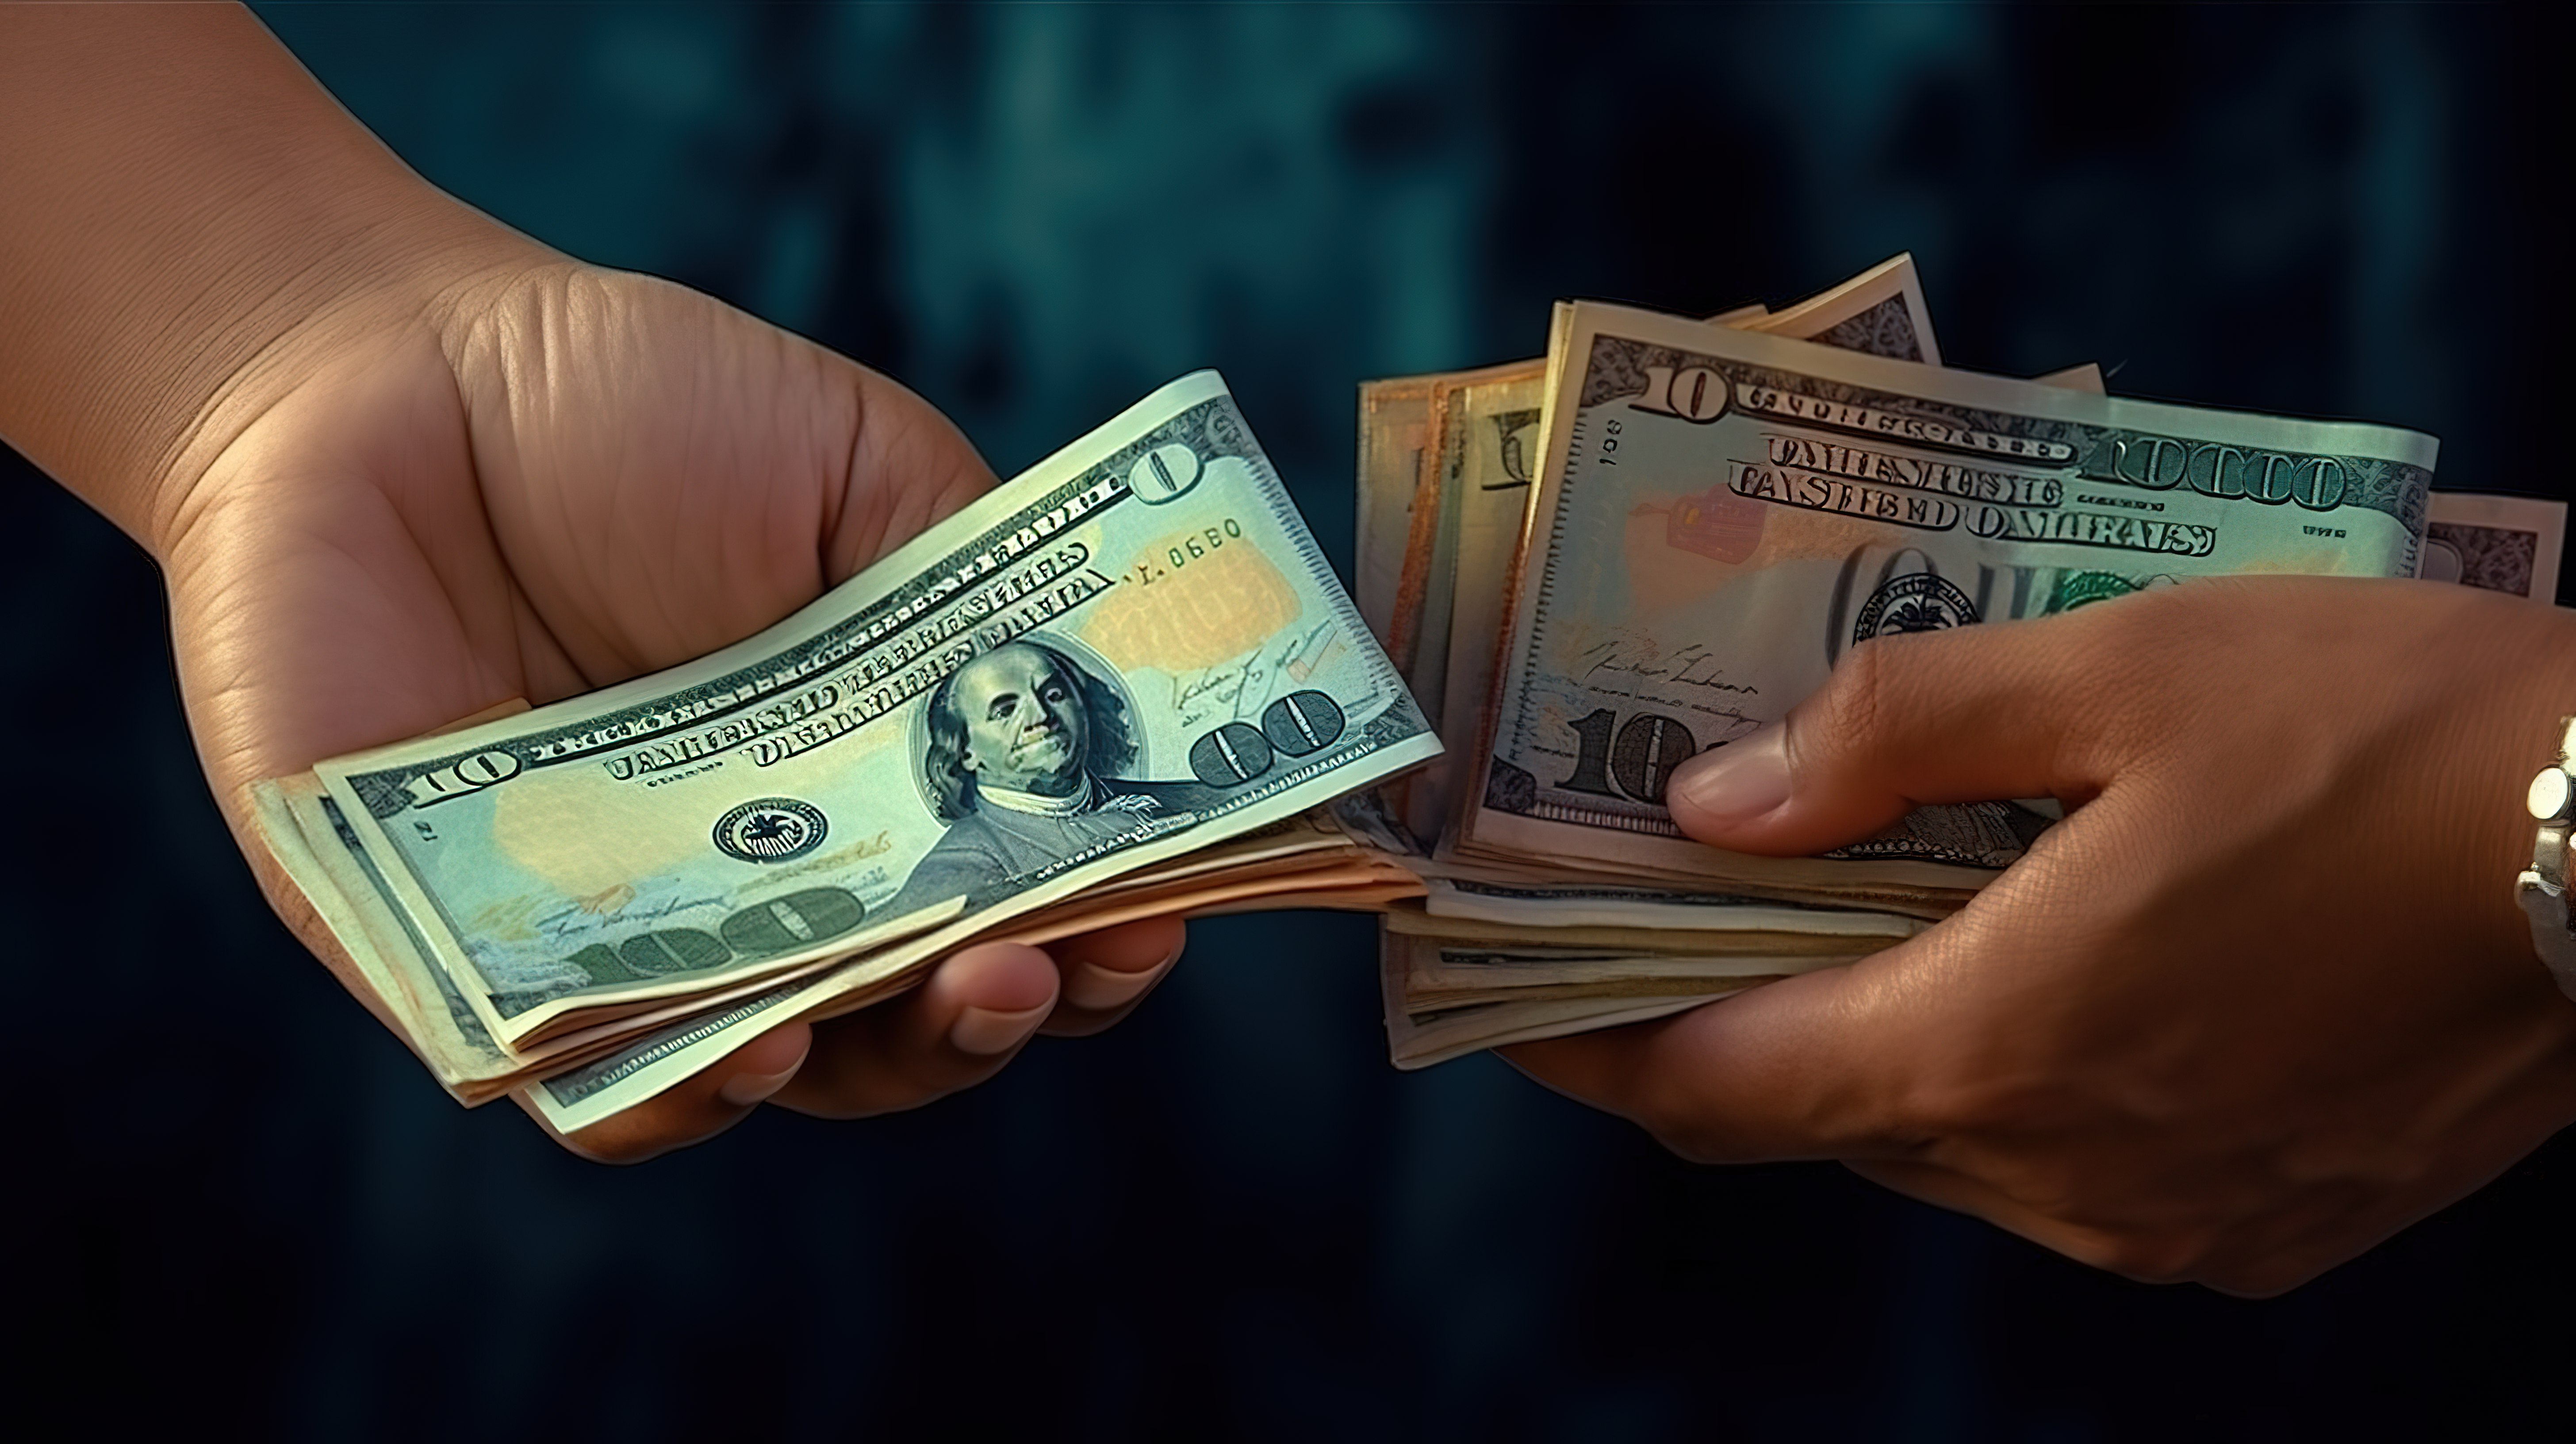 3D 渲染的手提供和接收象征付款或投资的一捆现金图片